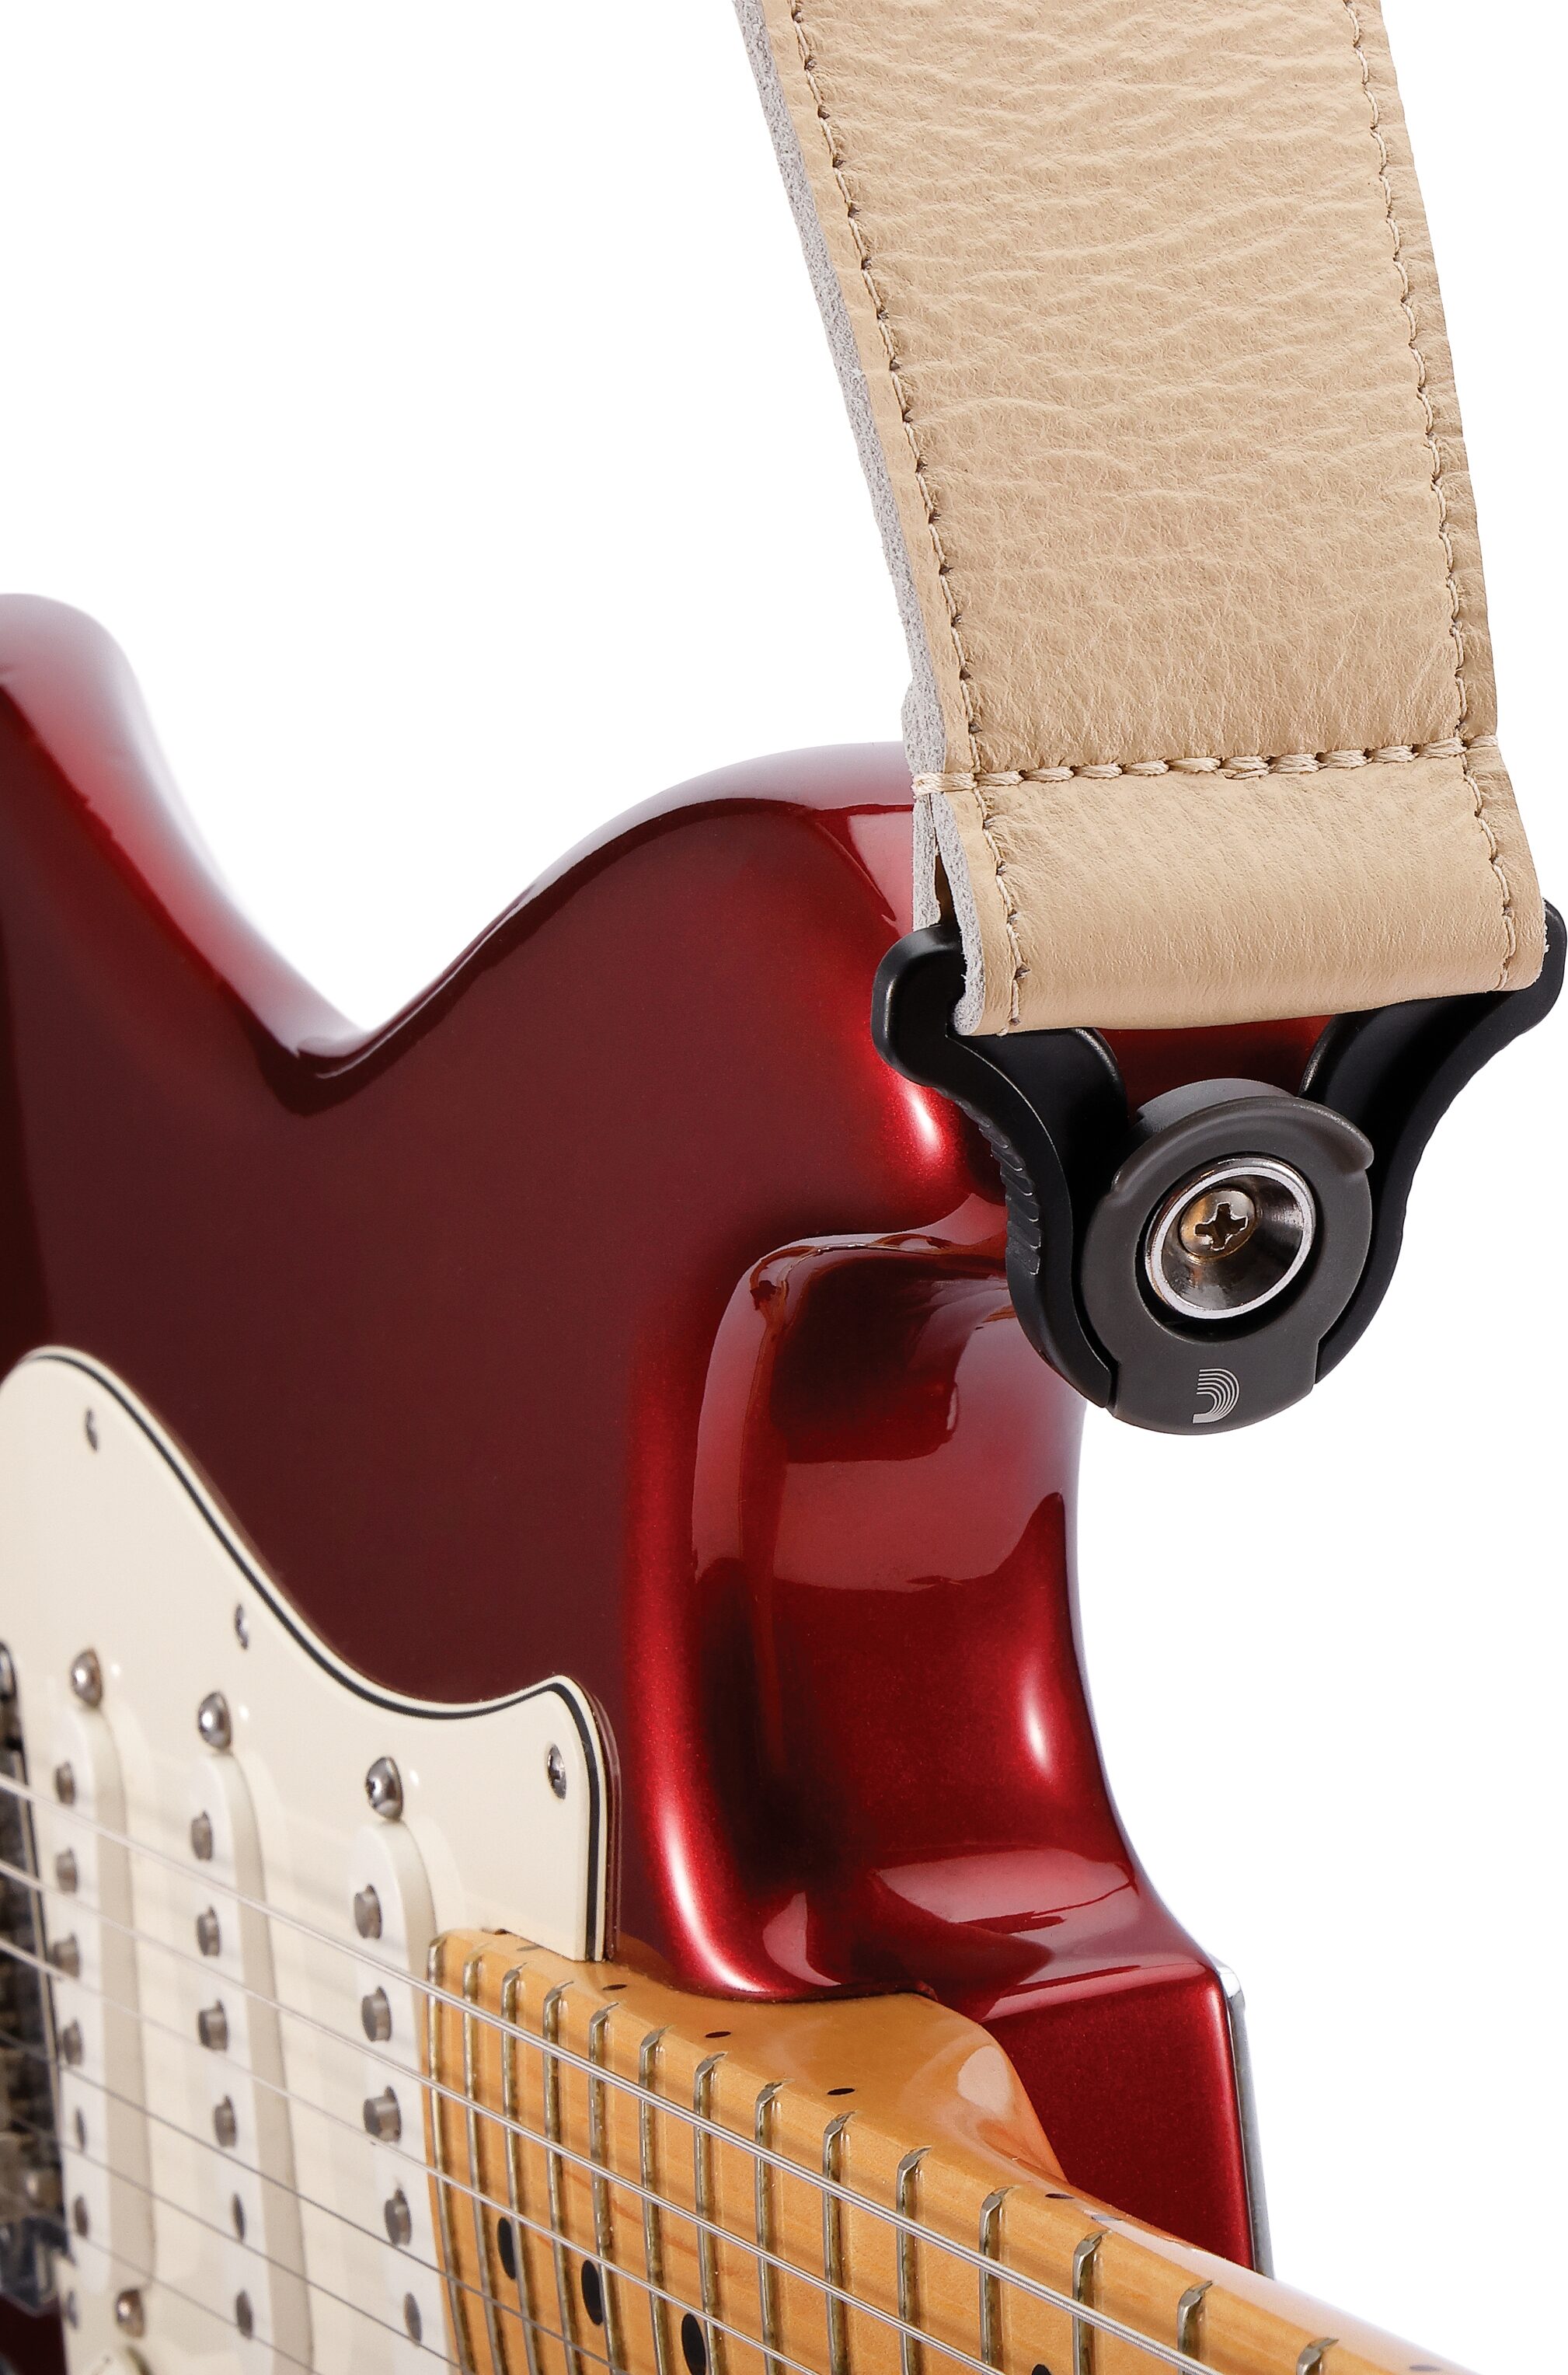 D'Addario Comfort Leather Auto Lock Guitar Strap